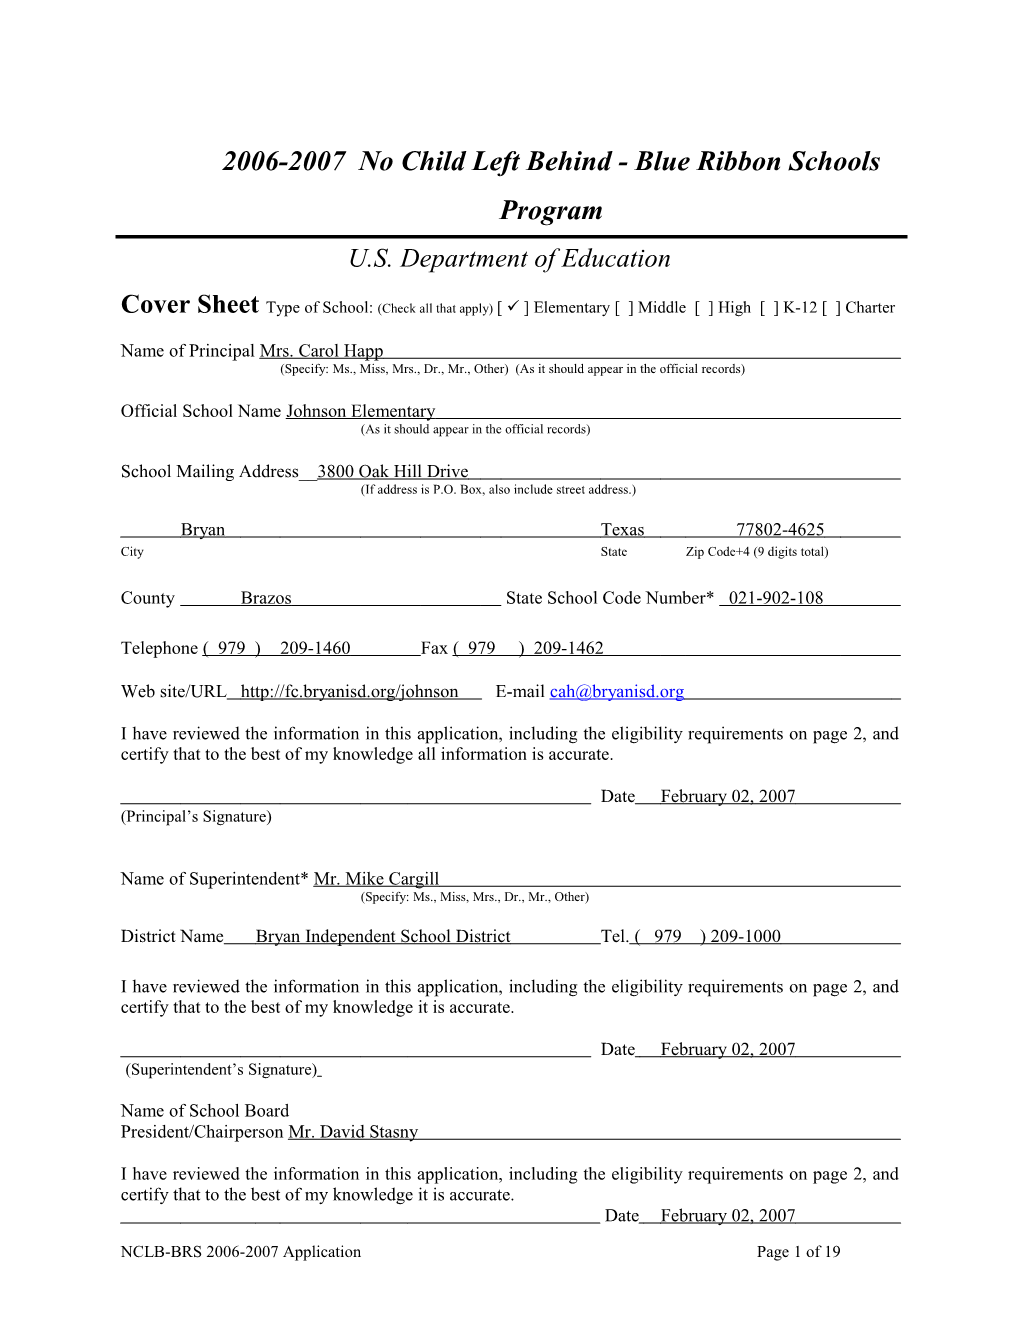 Application: 2006-2007, No Child Left Behind - Blue Ribbon Schools Program (MS Word) s2